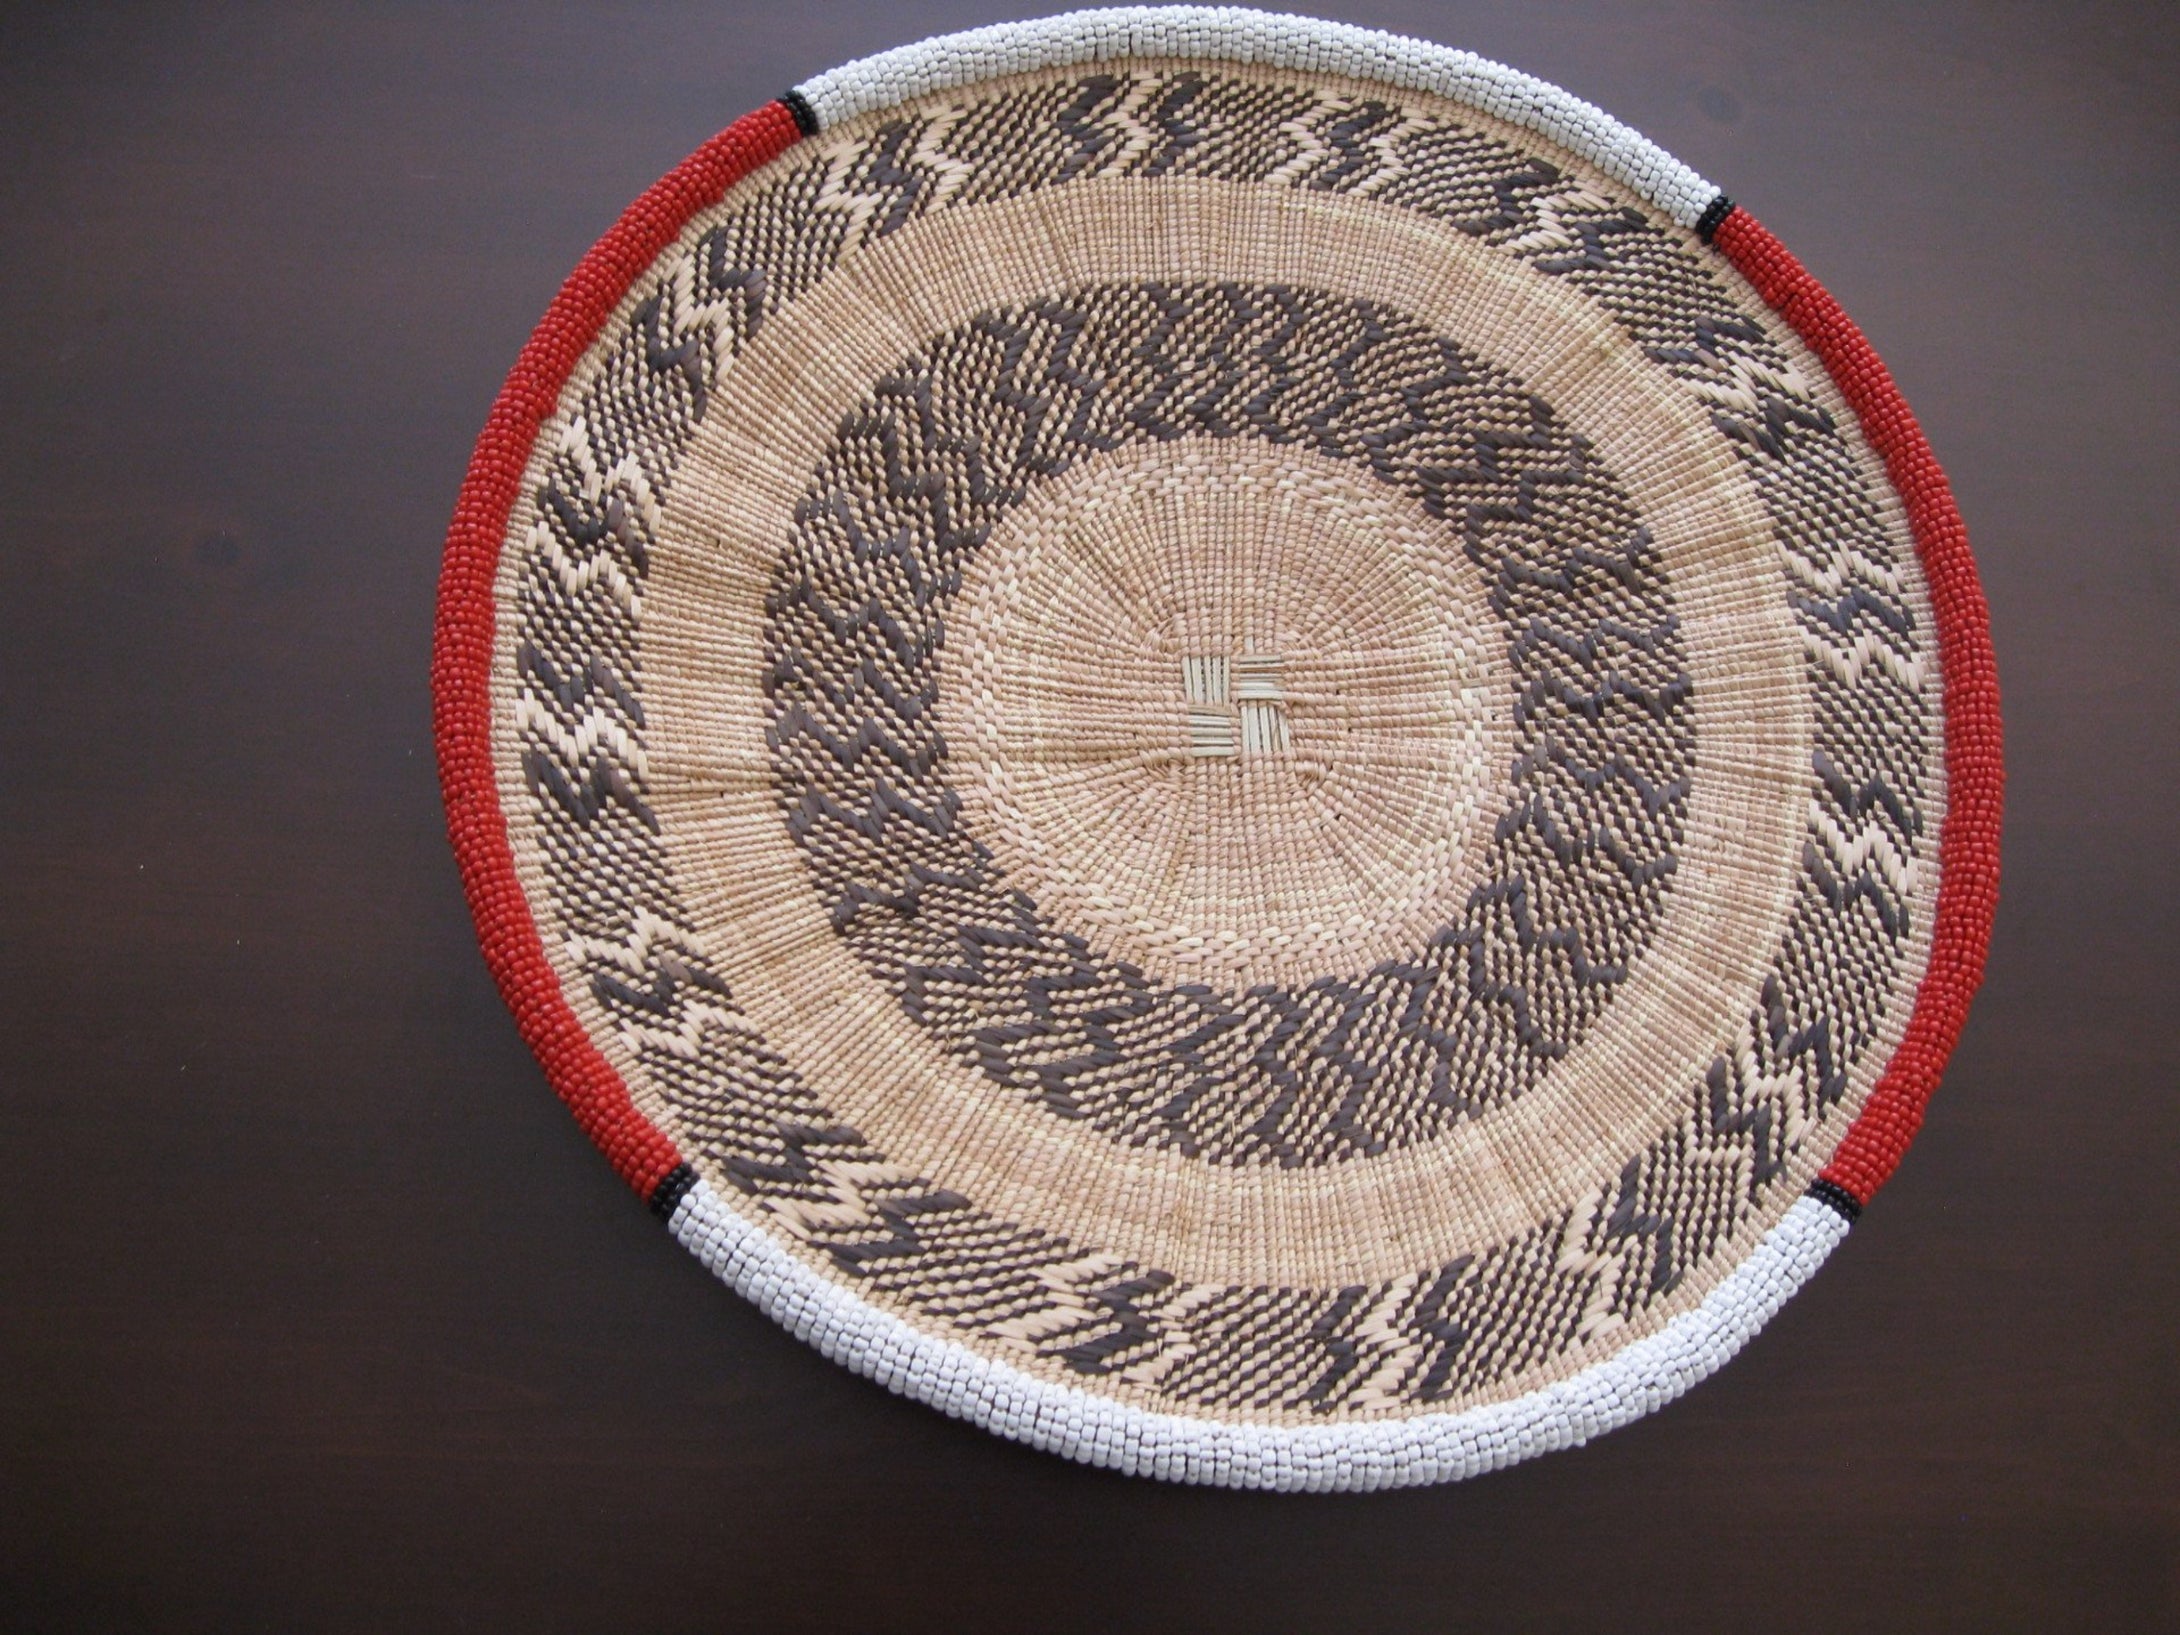 Medium handwoven basket with red and white beading around the rim